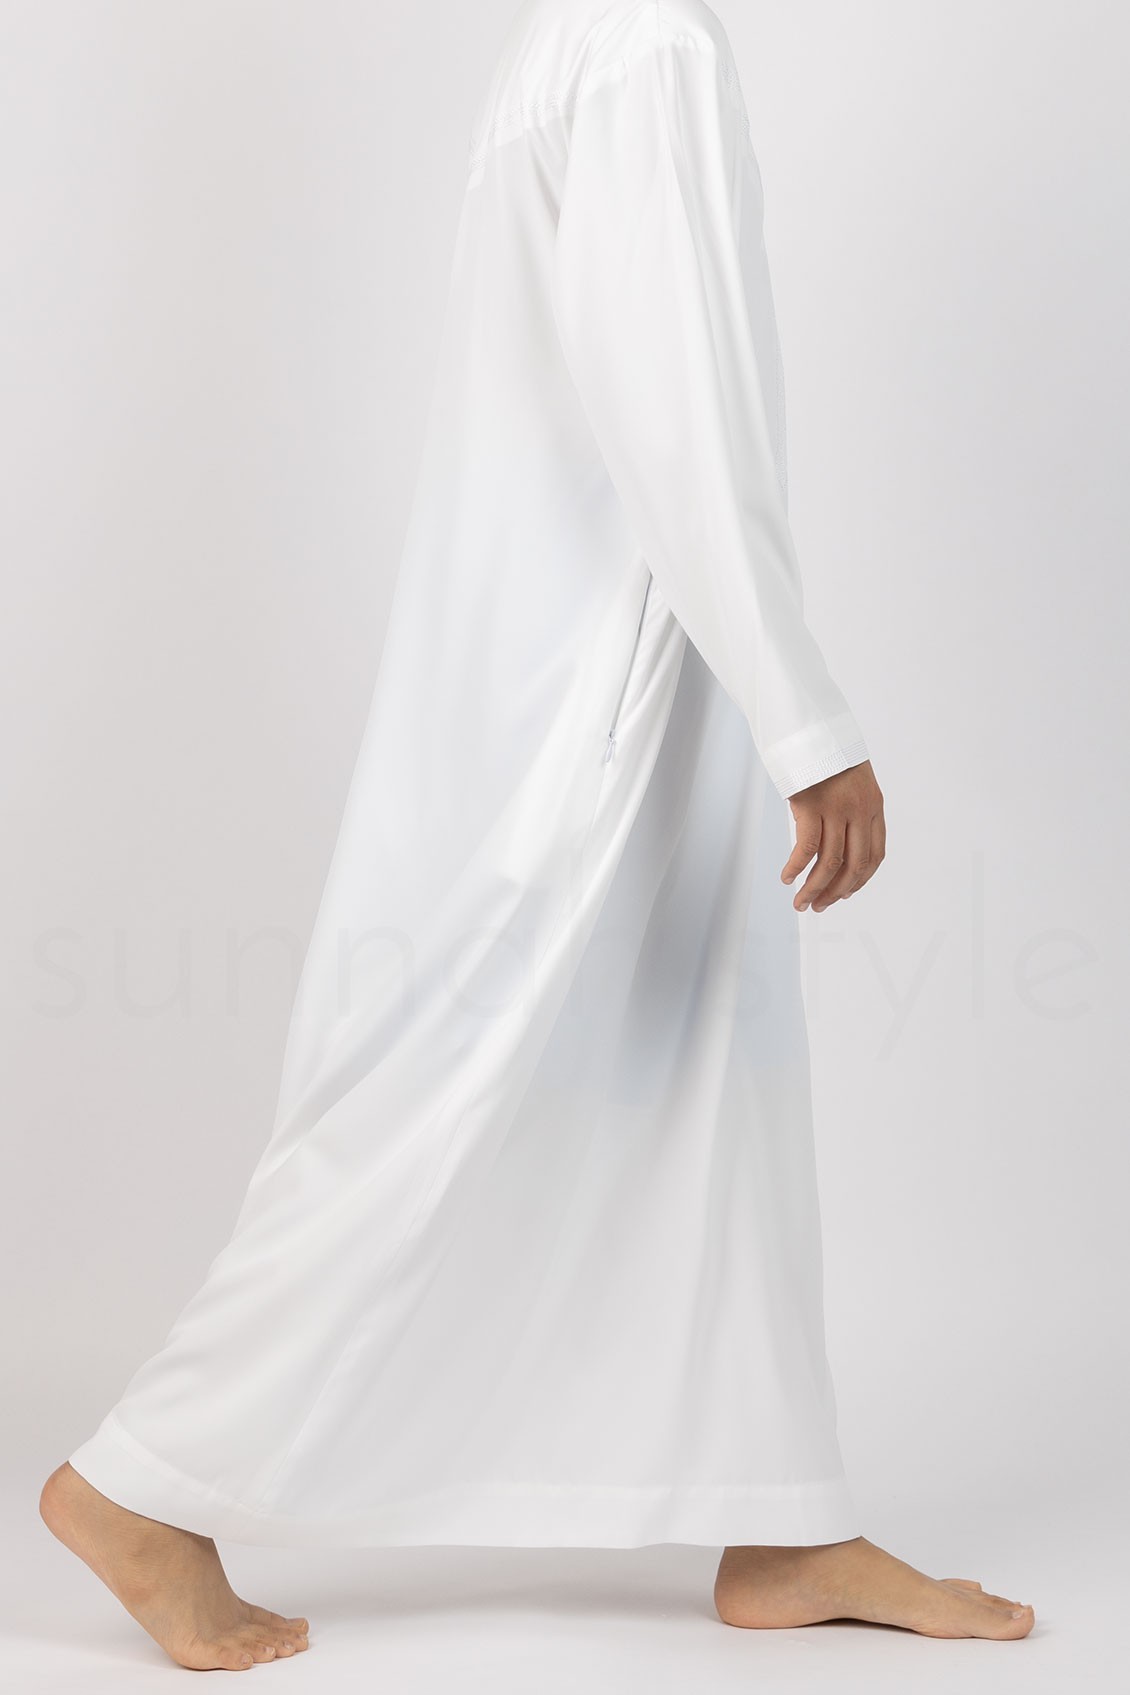 Sunnah Style Boys Omani Embroidered Thobe White Child